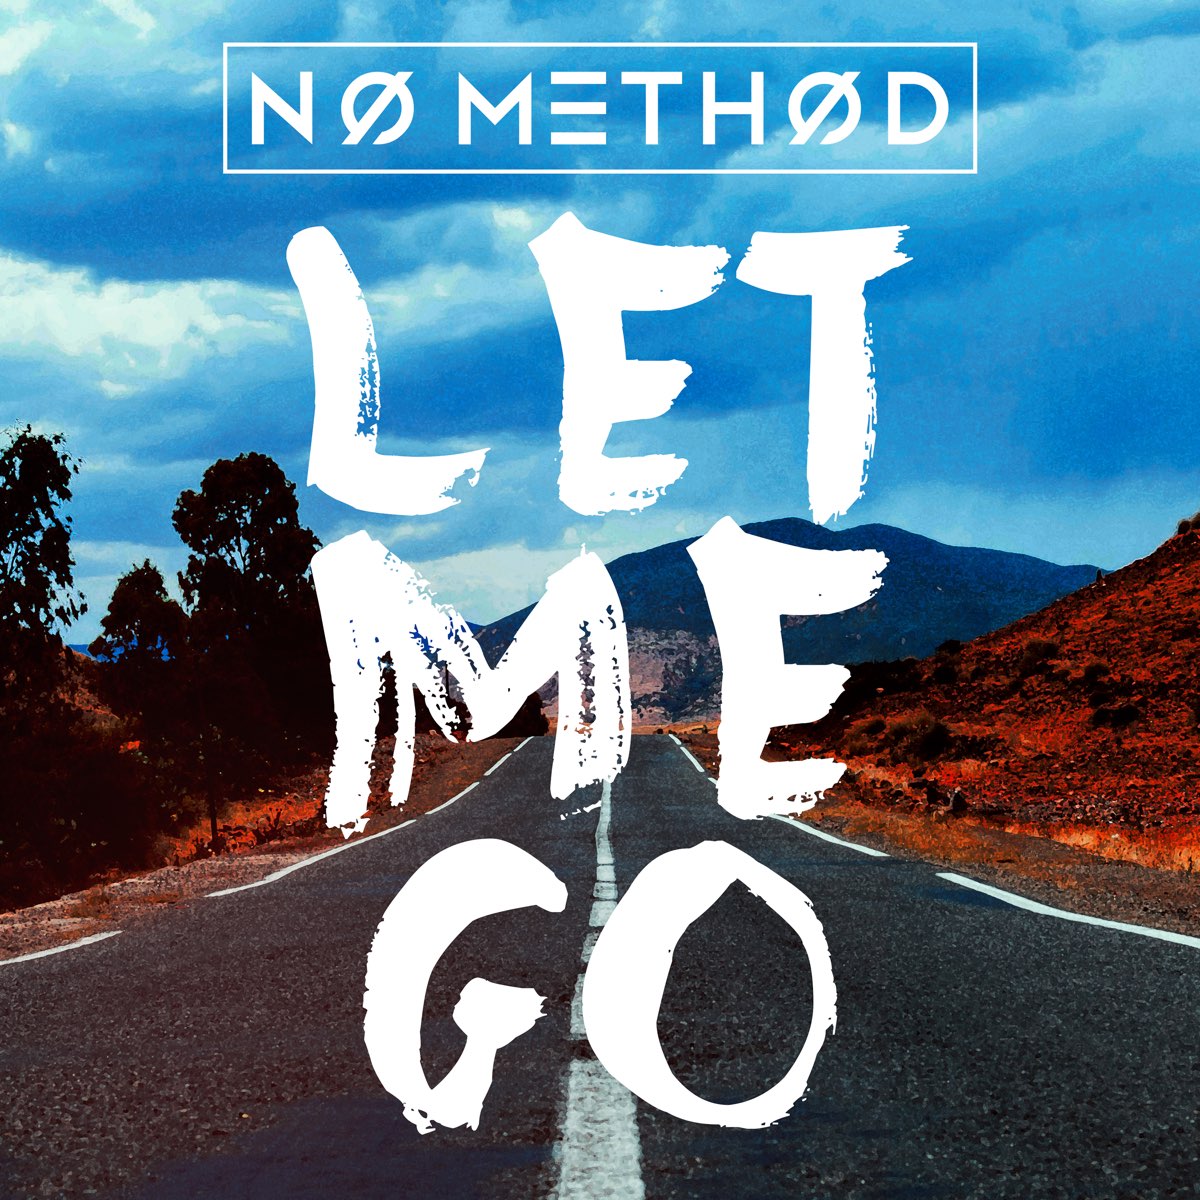 No method Let me go. Let me go (2017). Иллюстрация Let me go. Let you go картинки. Let go edit